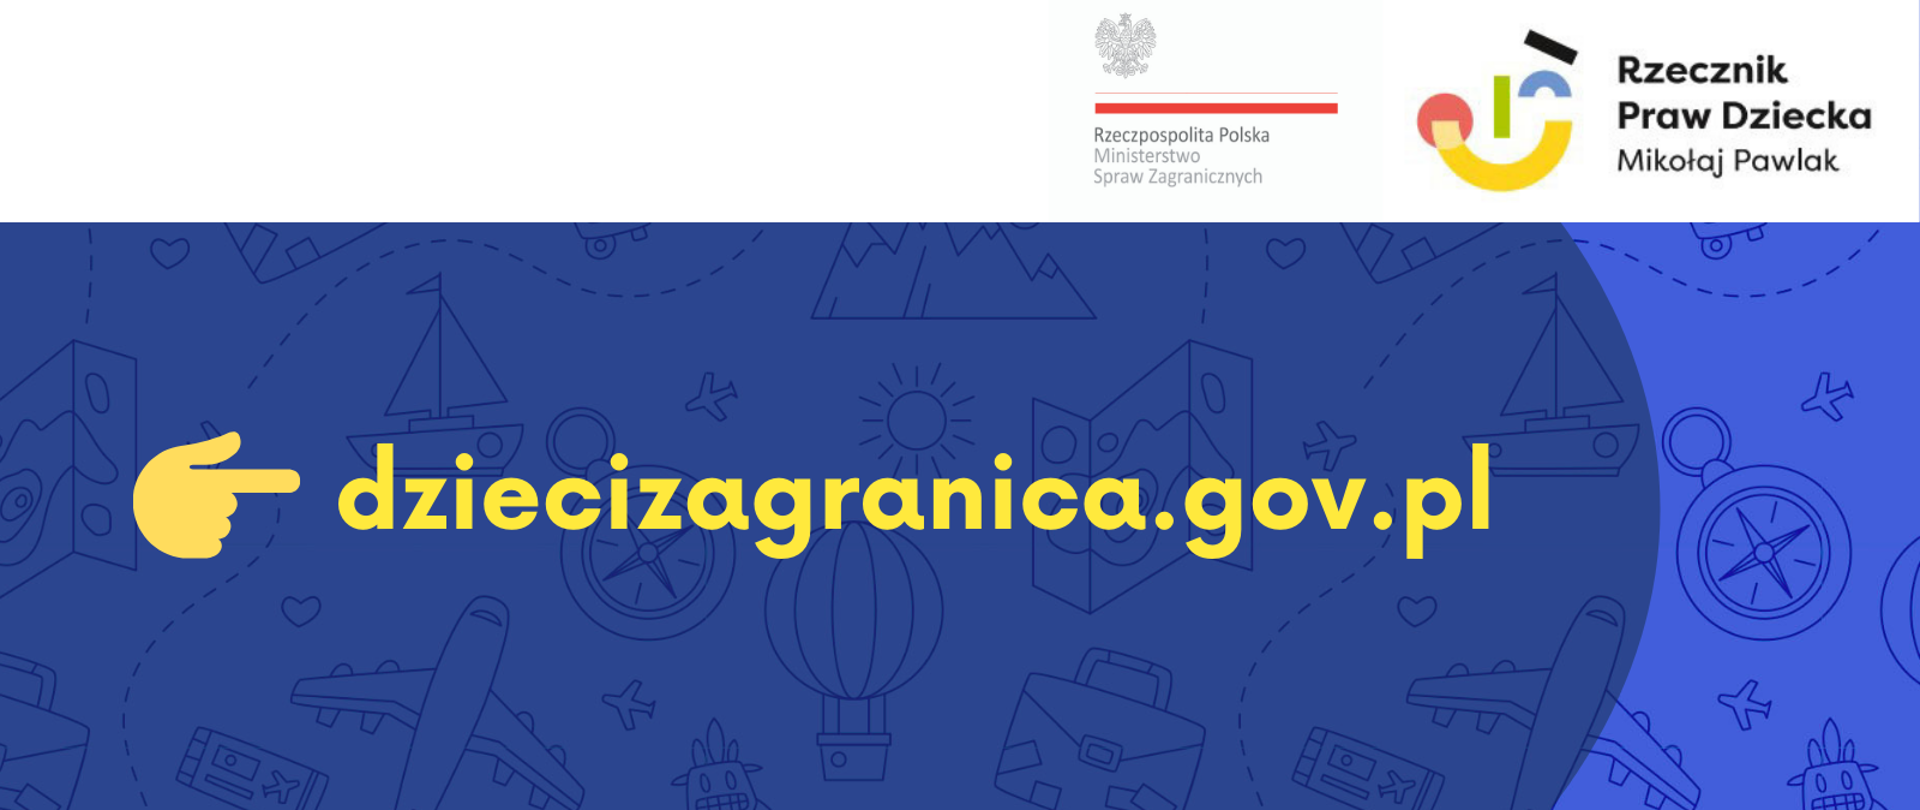 logo portalu dziecizagranica.gov.pl